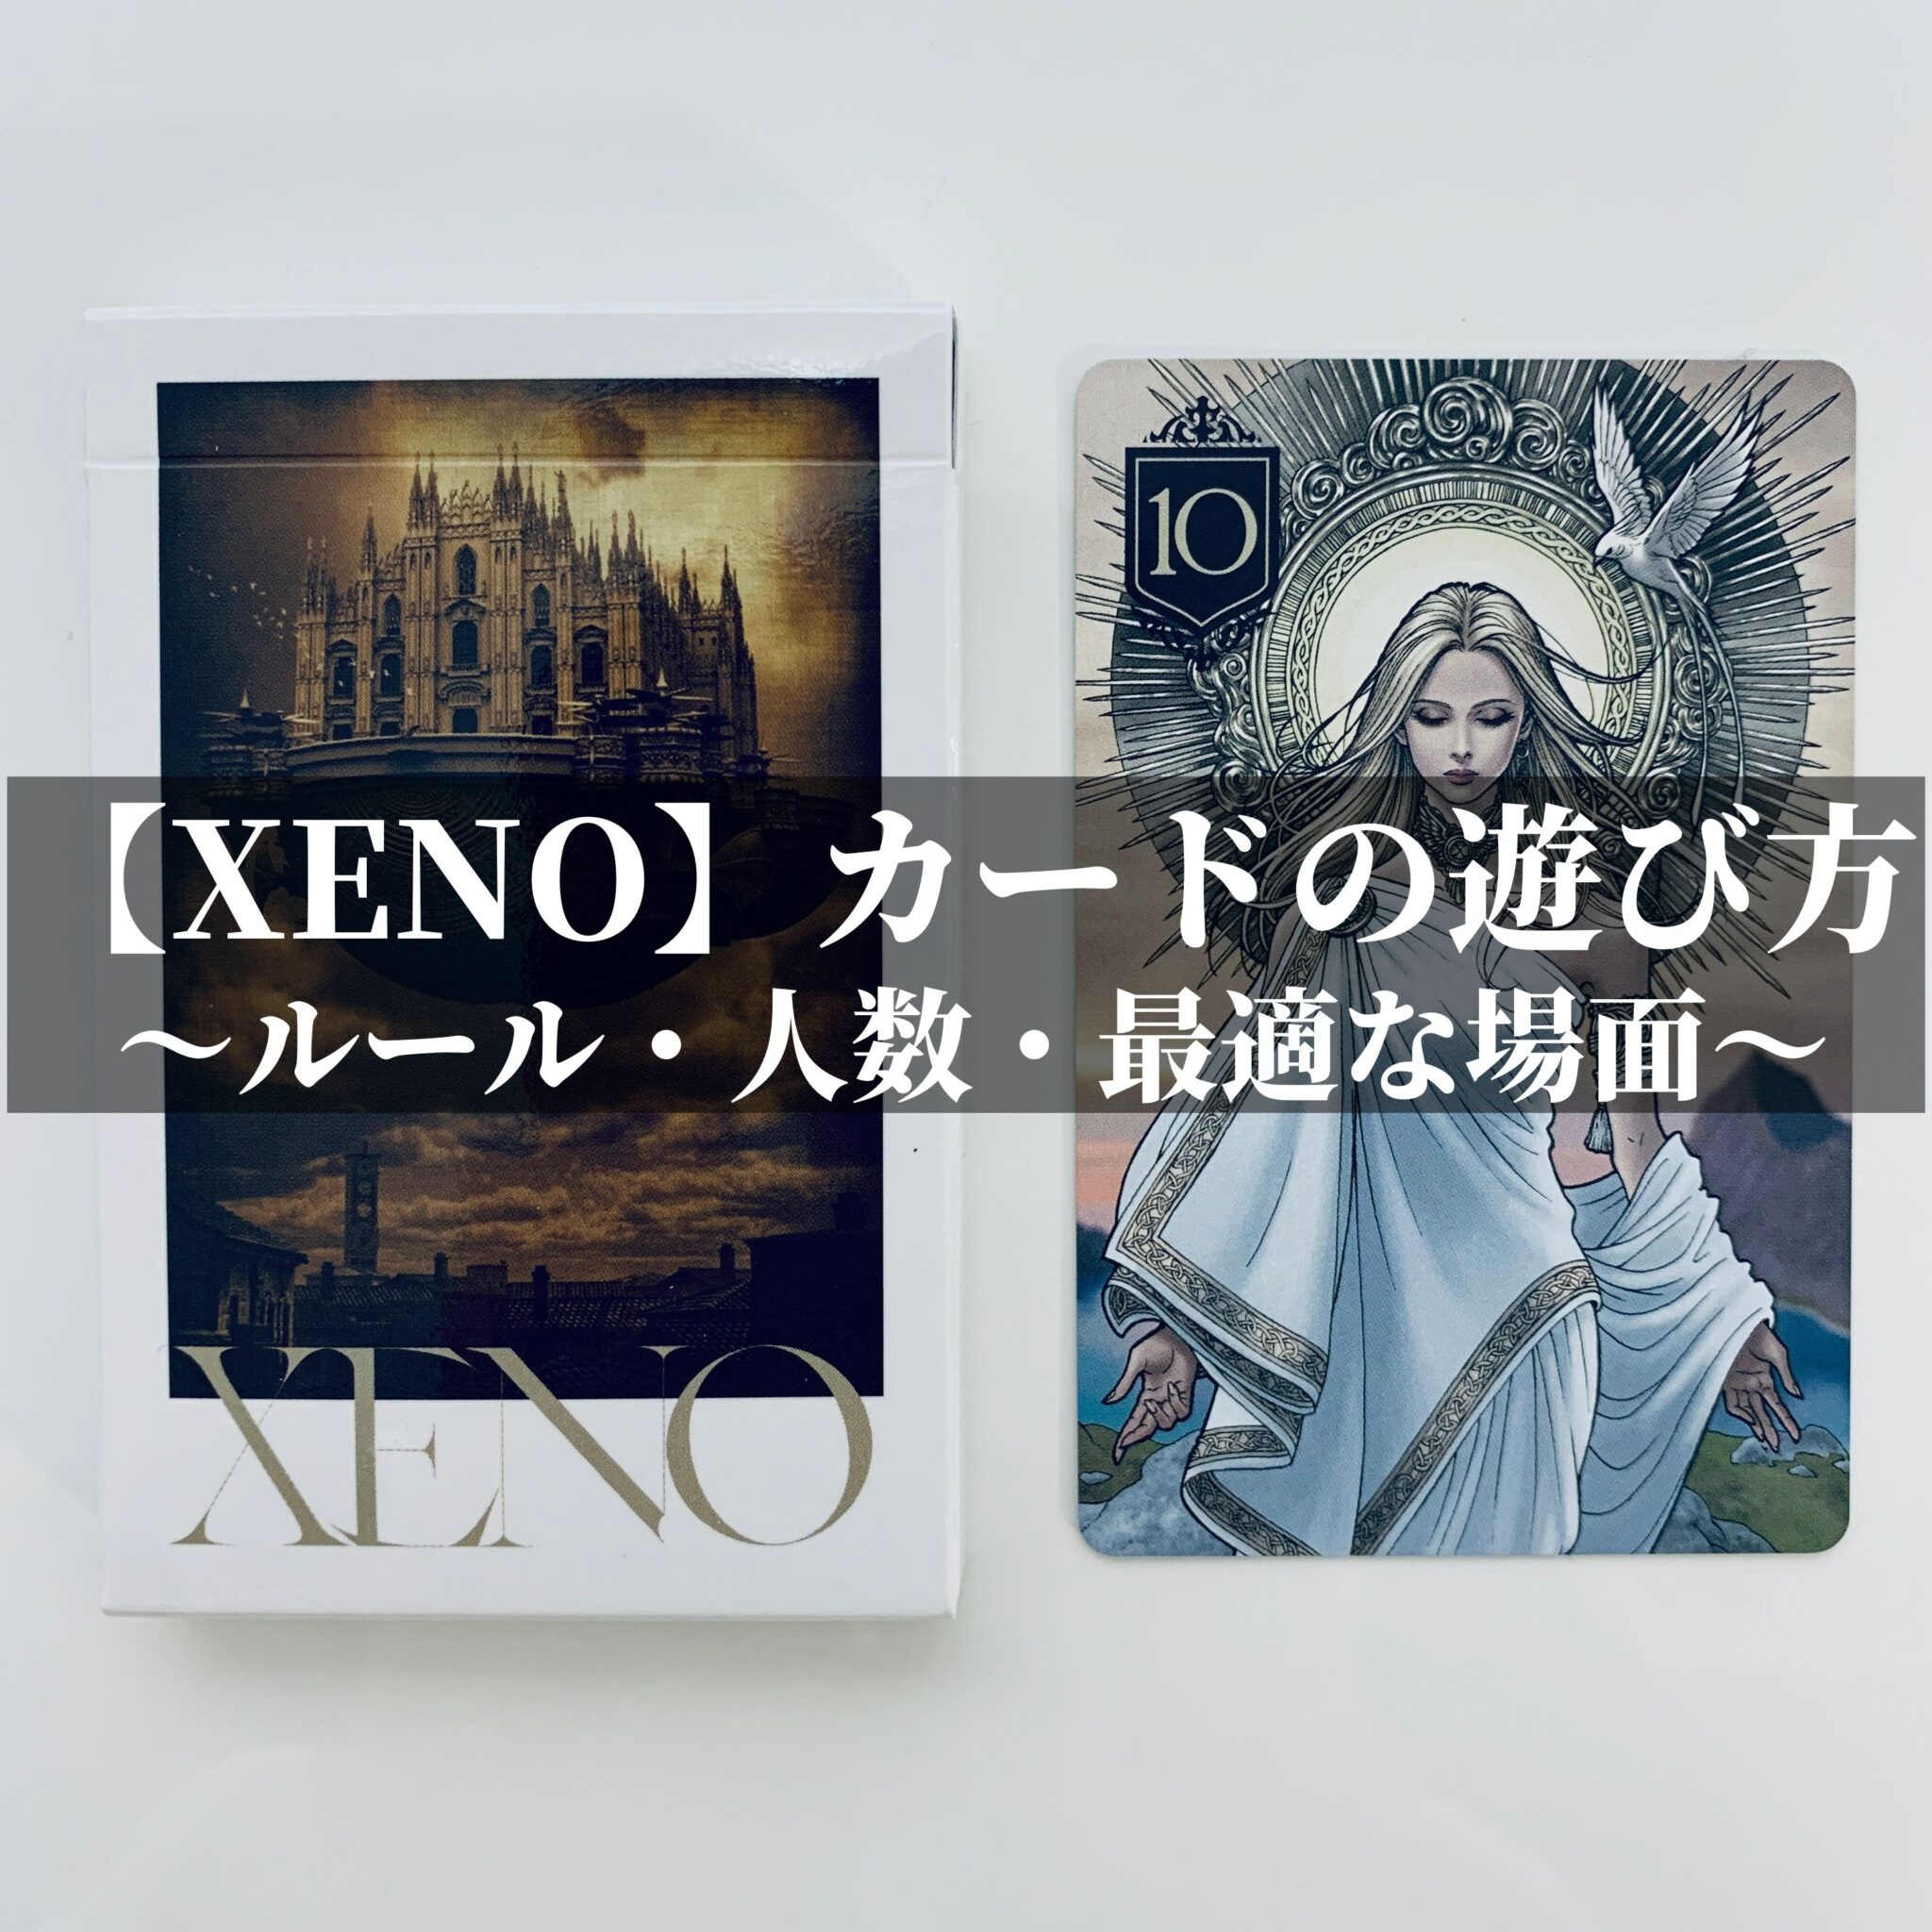 【XENO】カードの遊び方〜ルール・人数・最適な場面〜